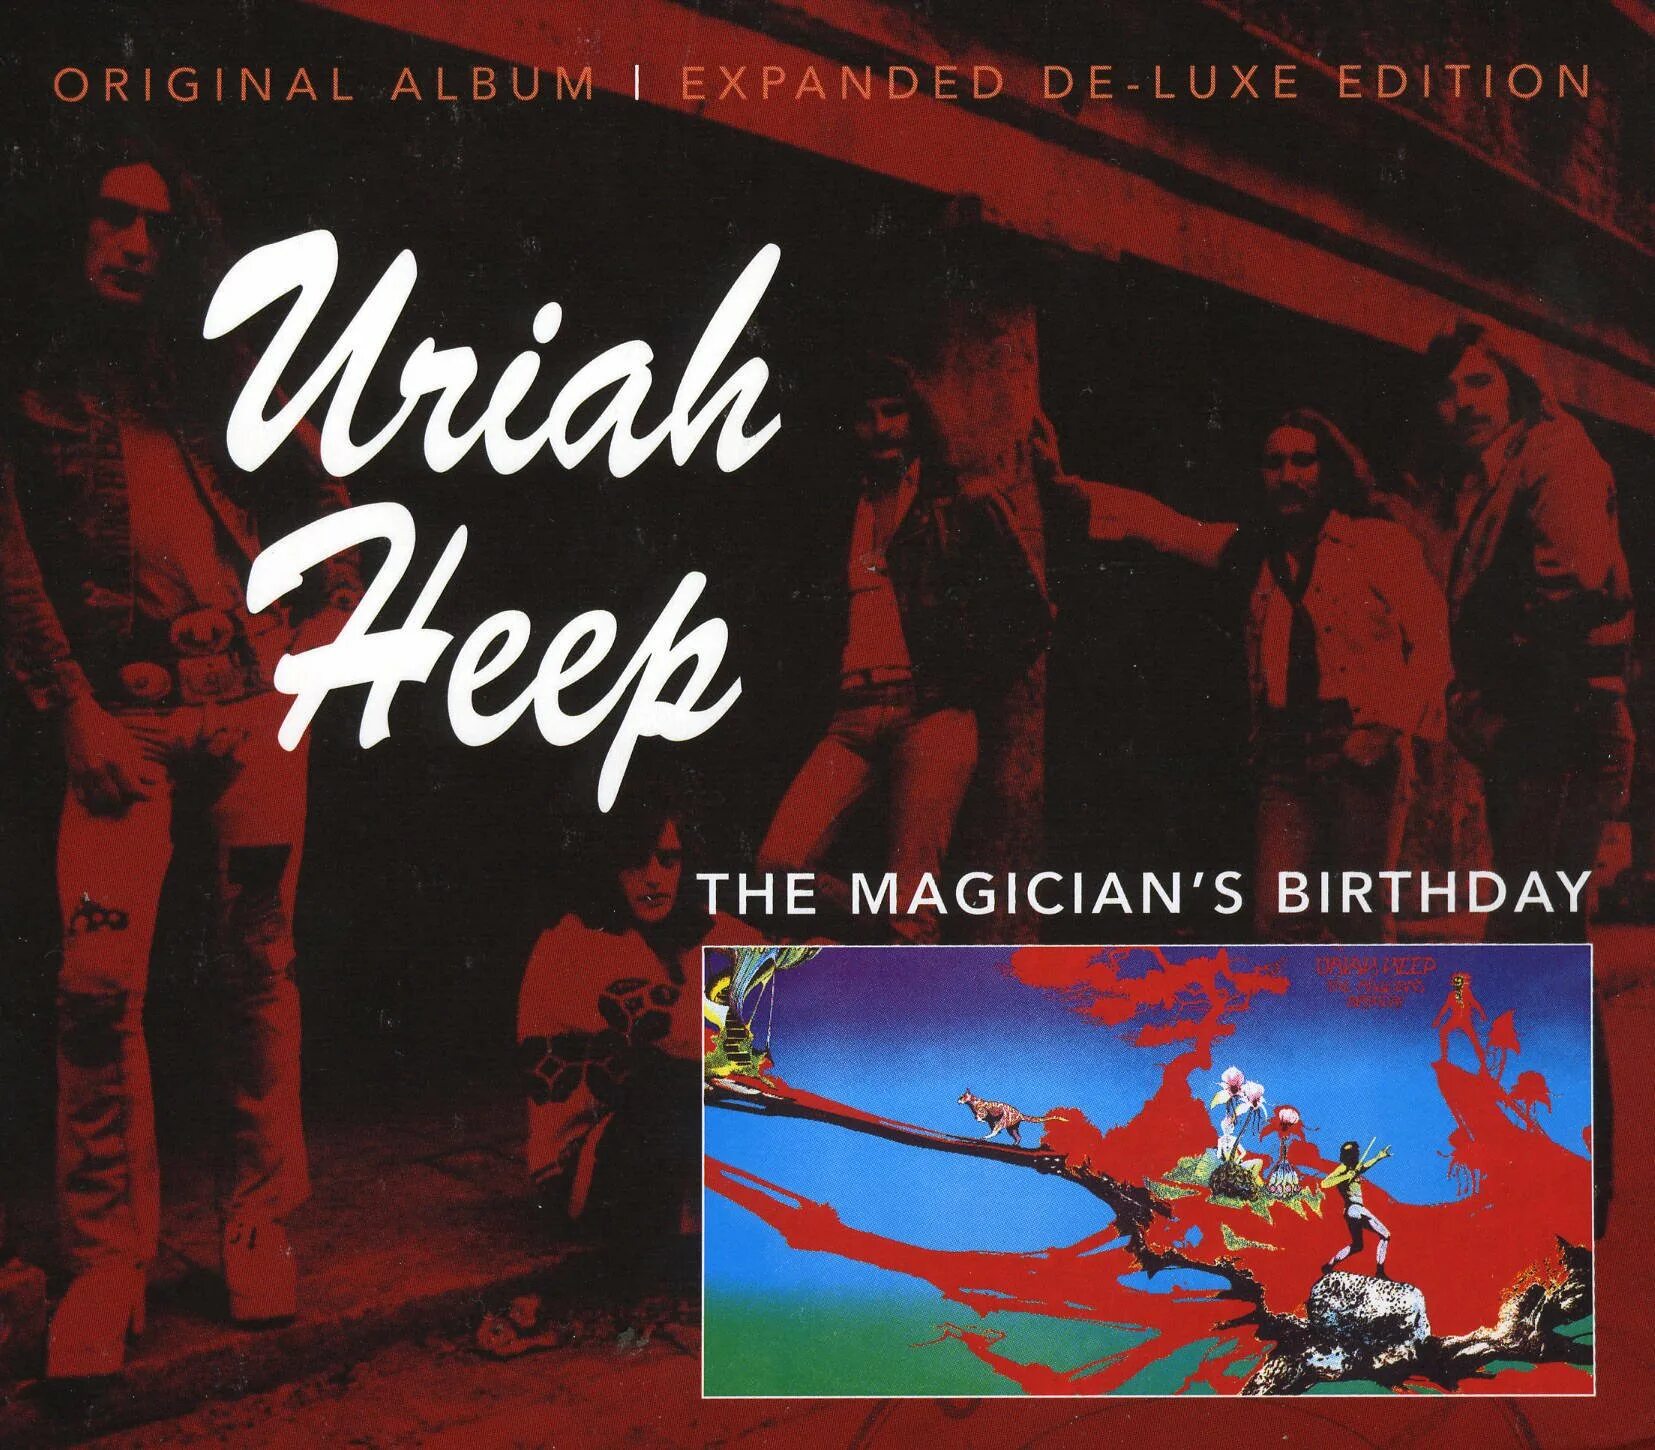 The magician s birthday. Uriah Heep the Magicians Birthday 1972 обложка. Uriah Heep 1972. Uriah Heep the Magician's Birthday 1972. Uriah Heep- обложка альбома 1972 the Magician Birthday.